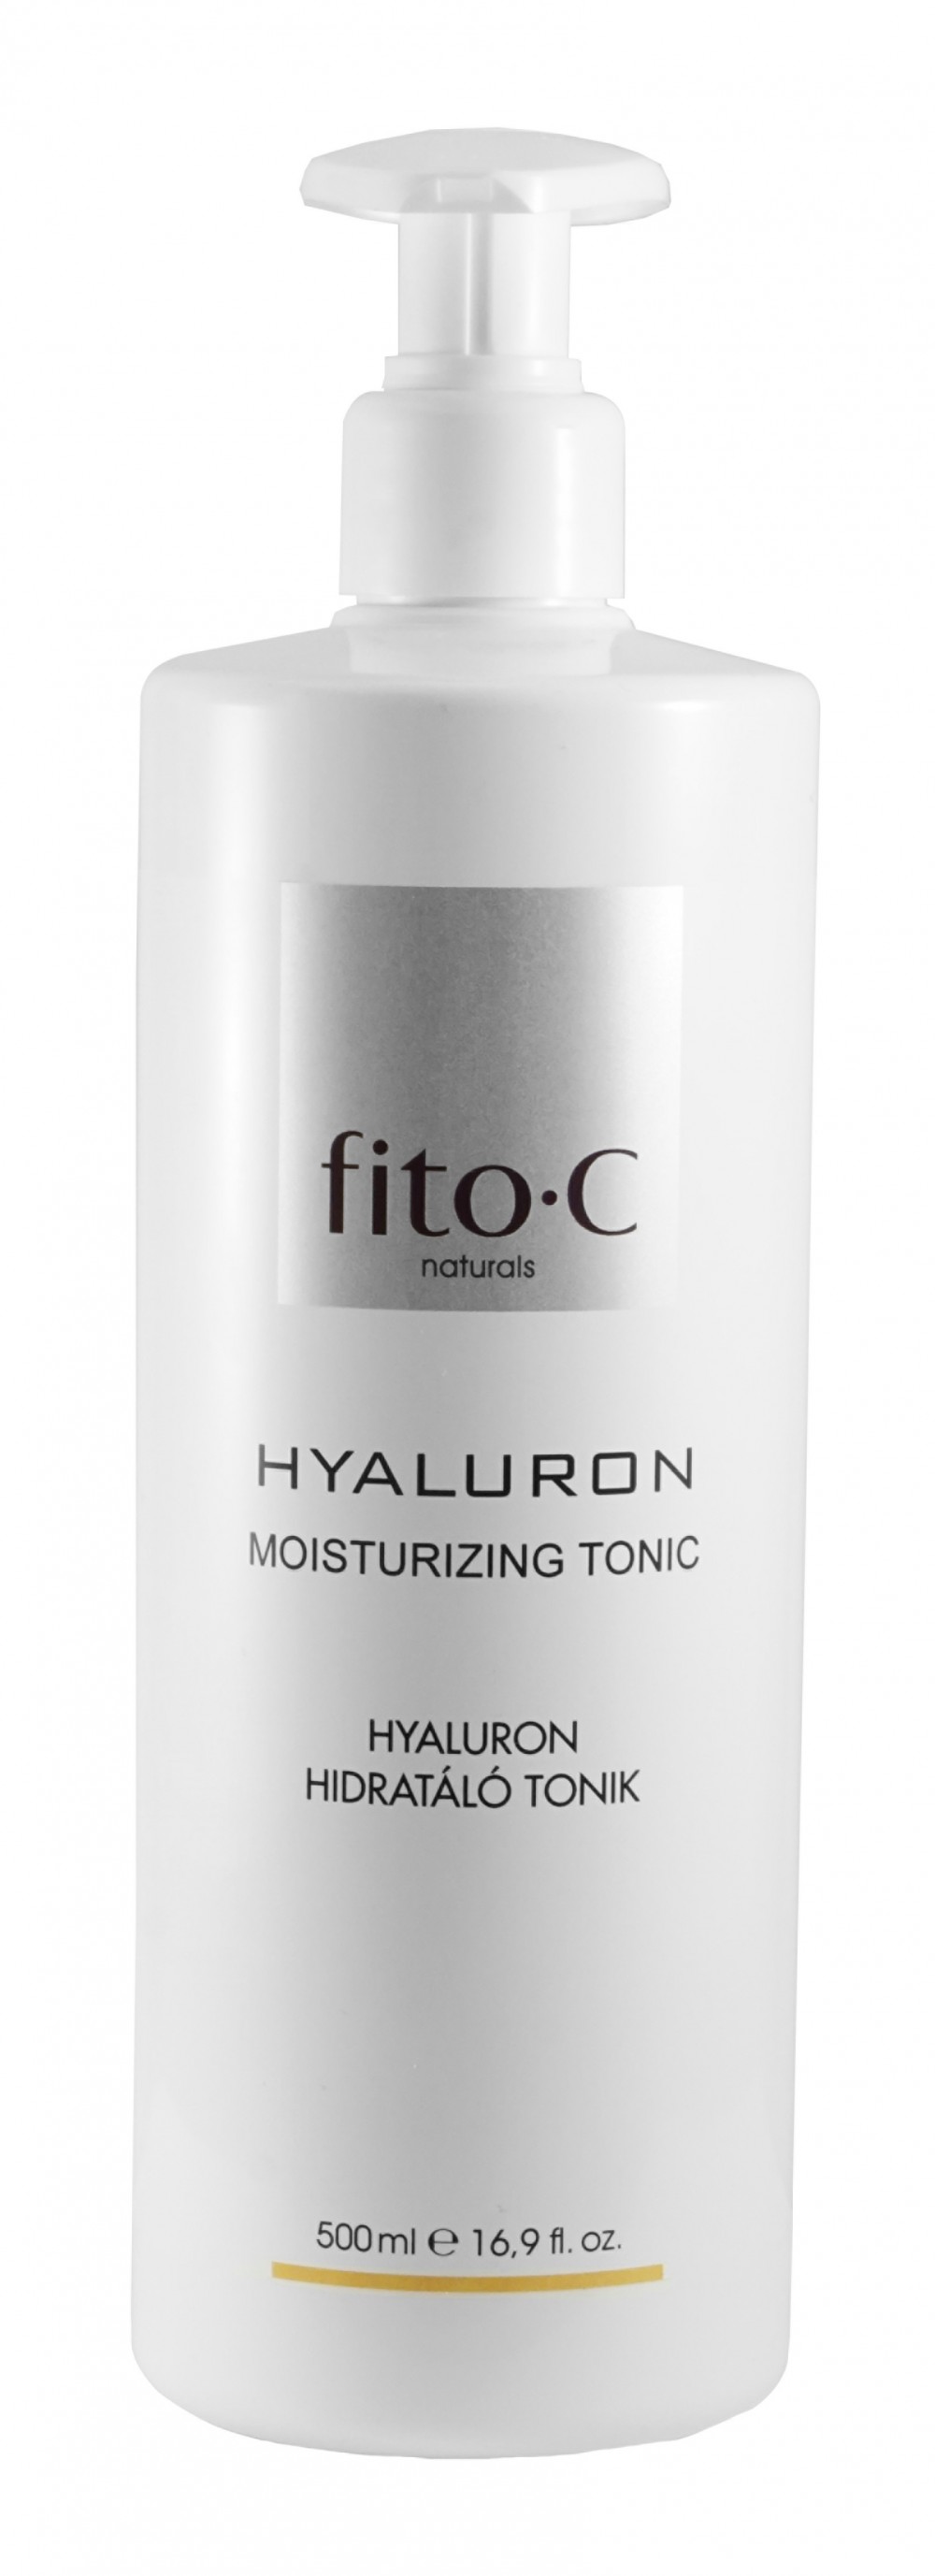 fito.C - Hyaluron Moisturizing Tonic - Hyaluron Hidratáló Tonik, 500ml